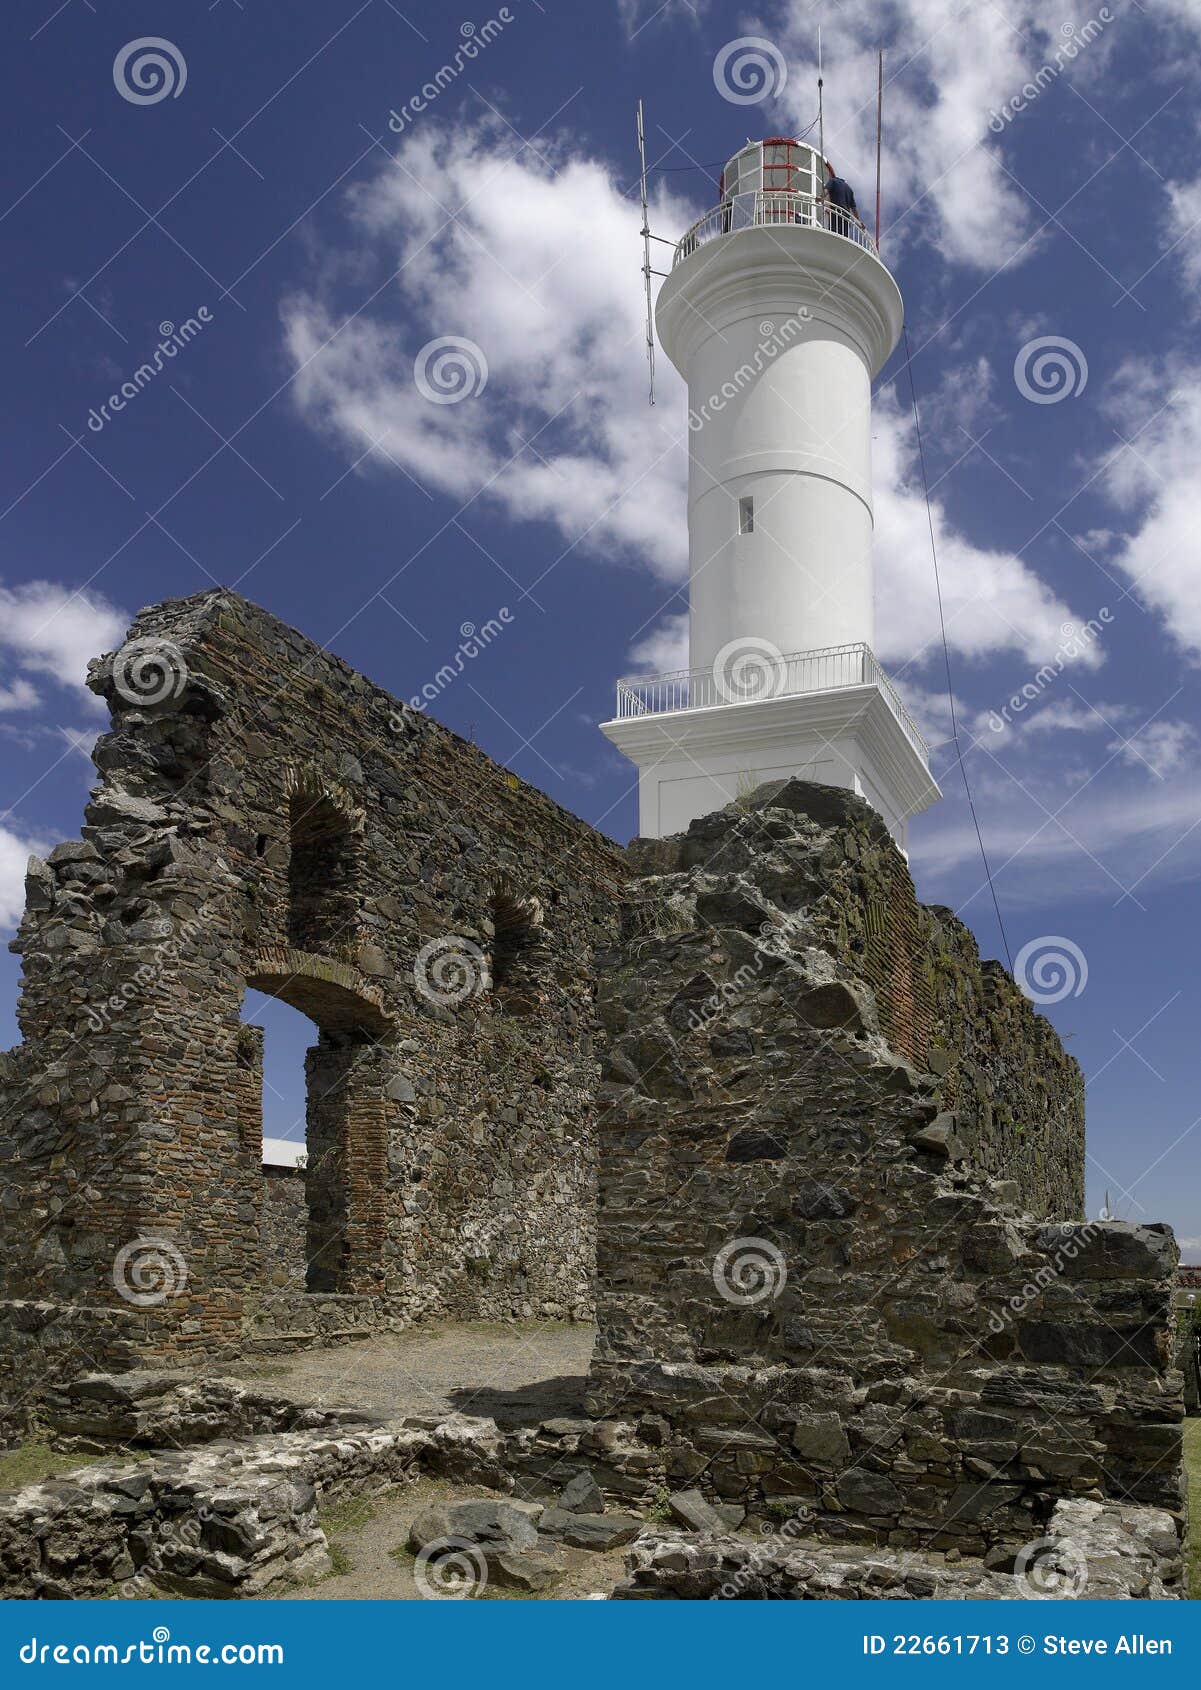 uruguay - colonia - lighthouse